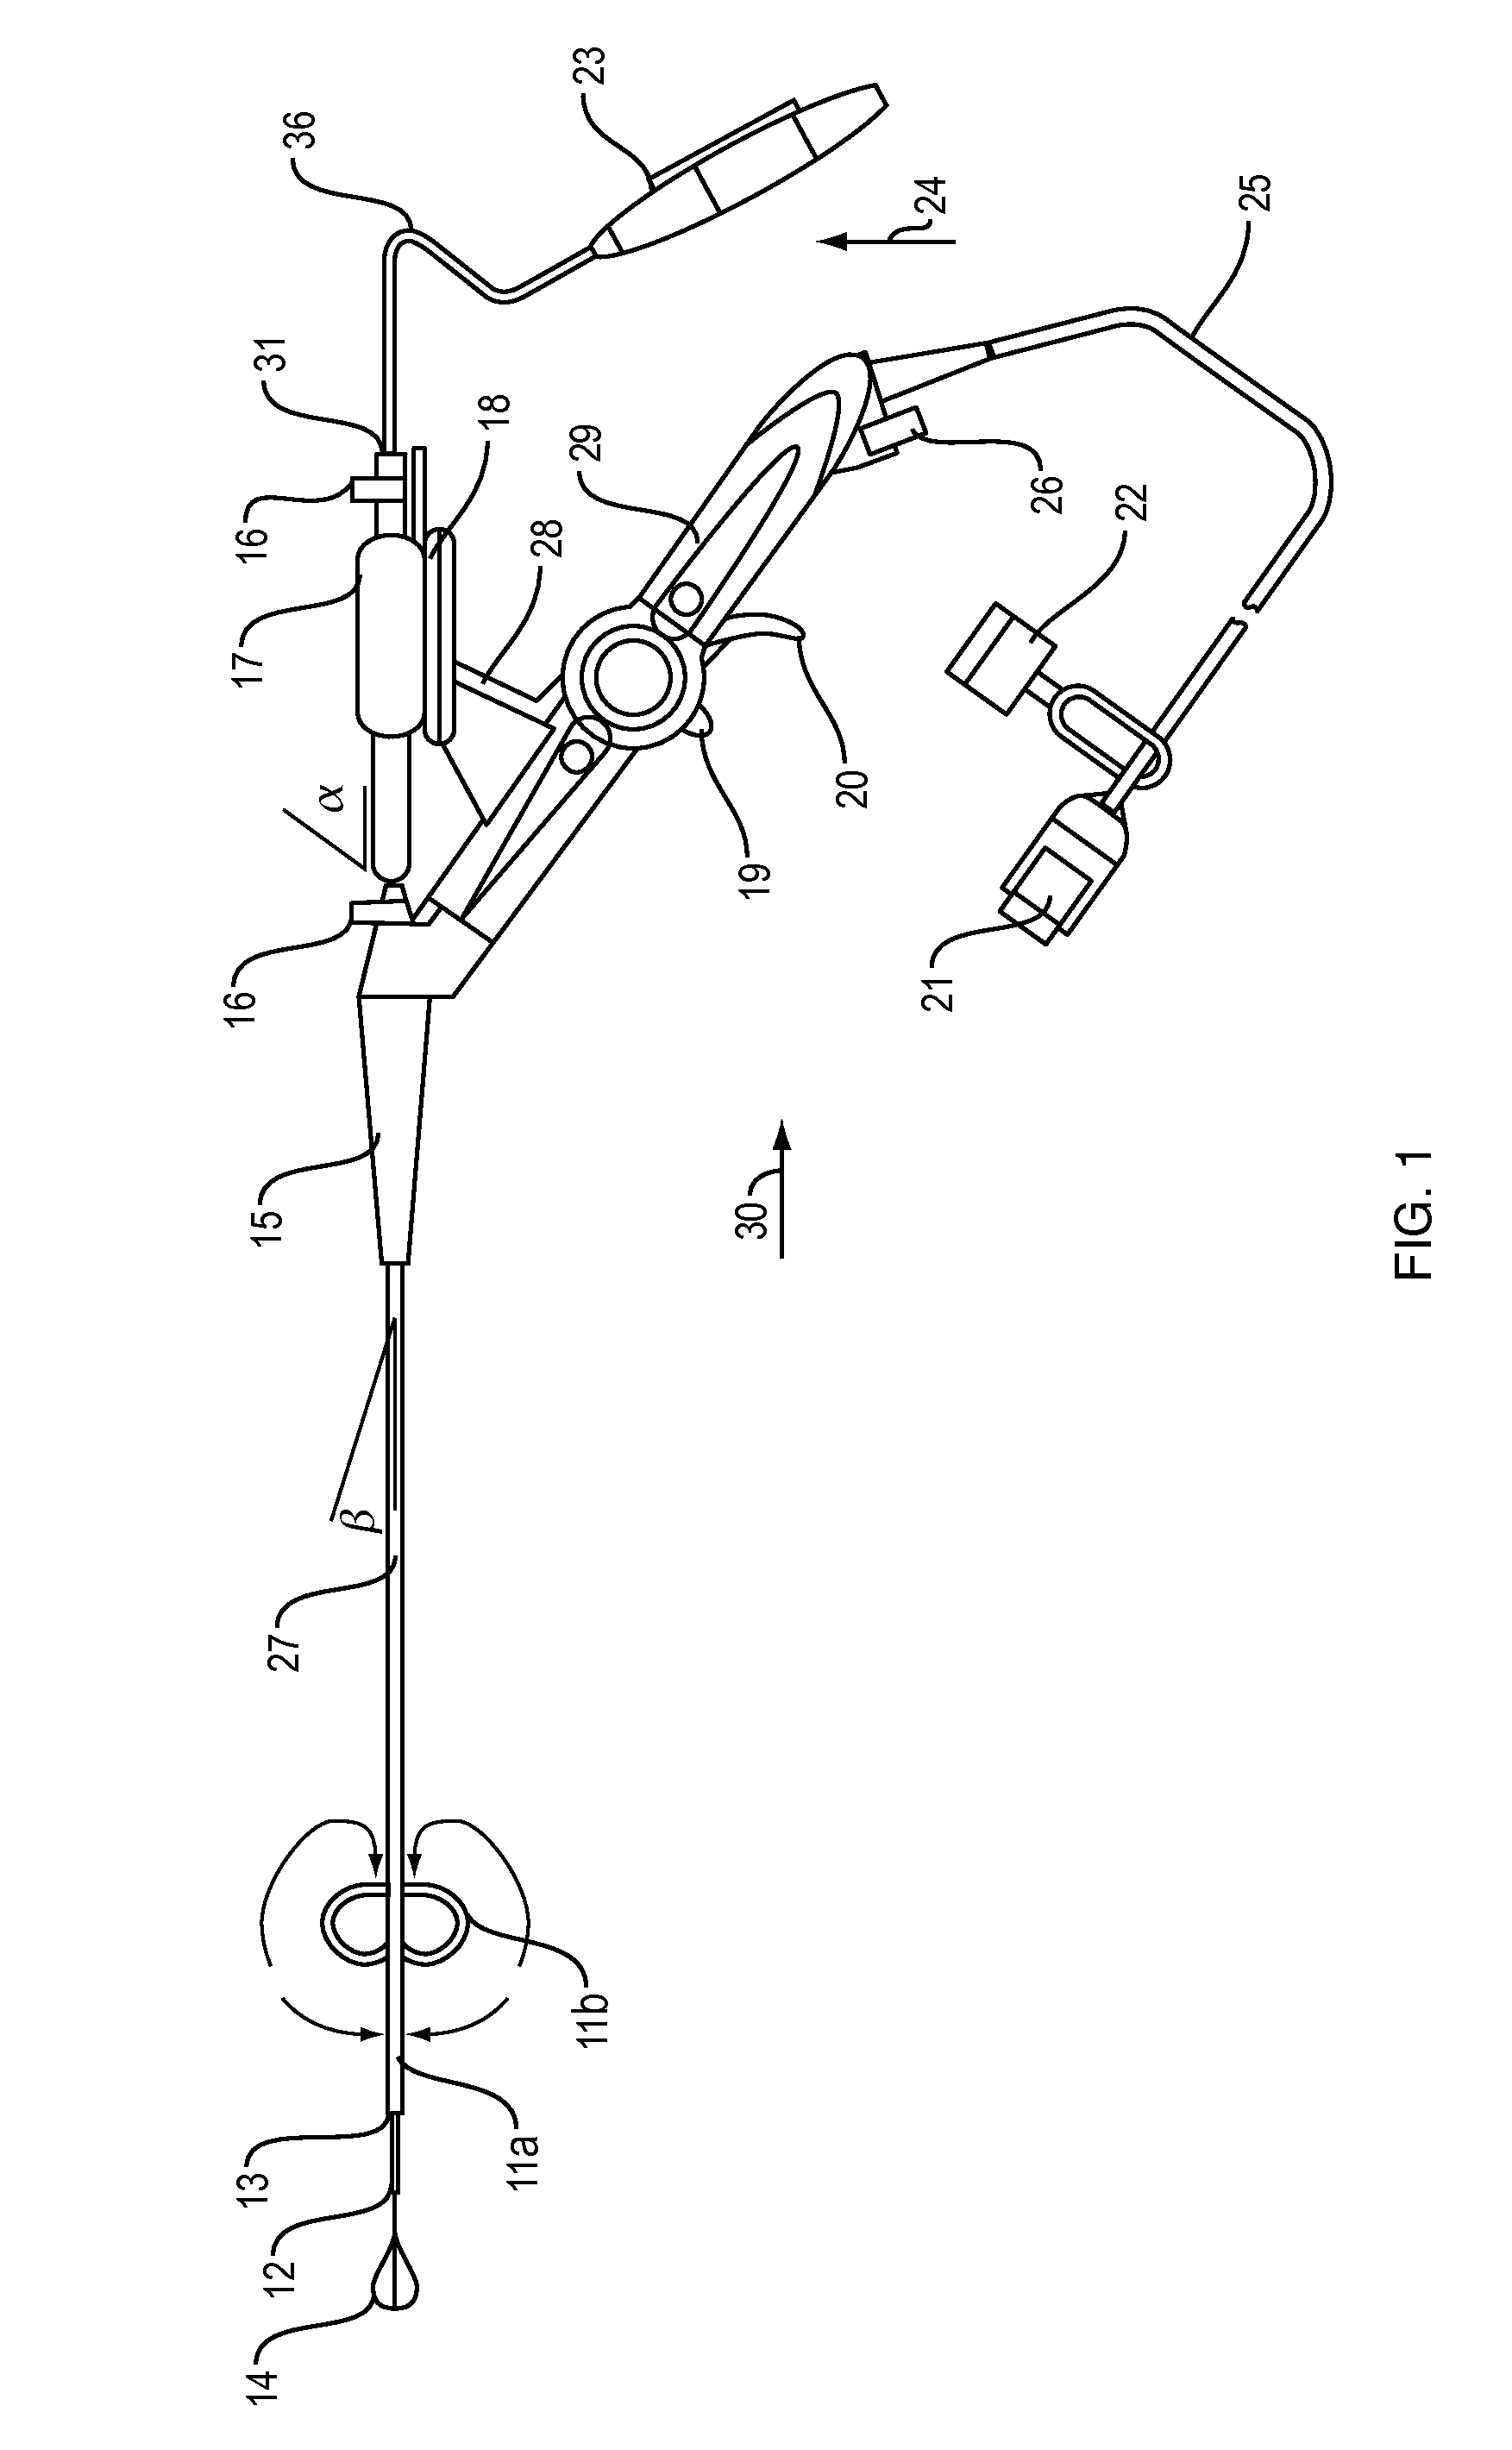 Lithotripsy Apparatus Using a Flexible Endoscope